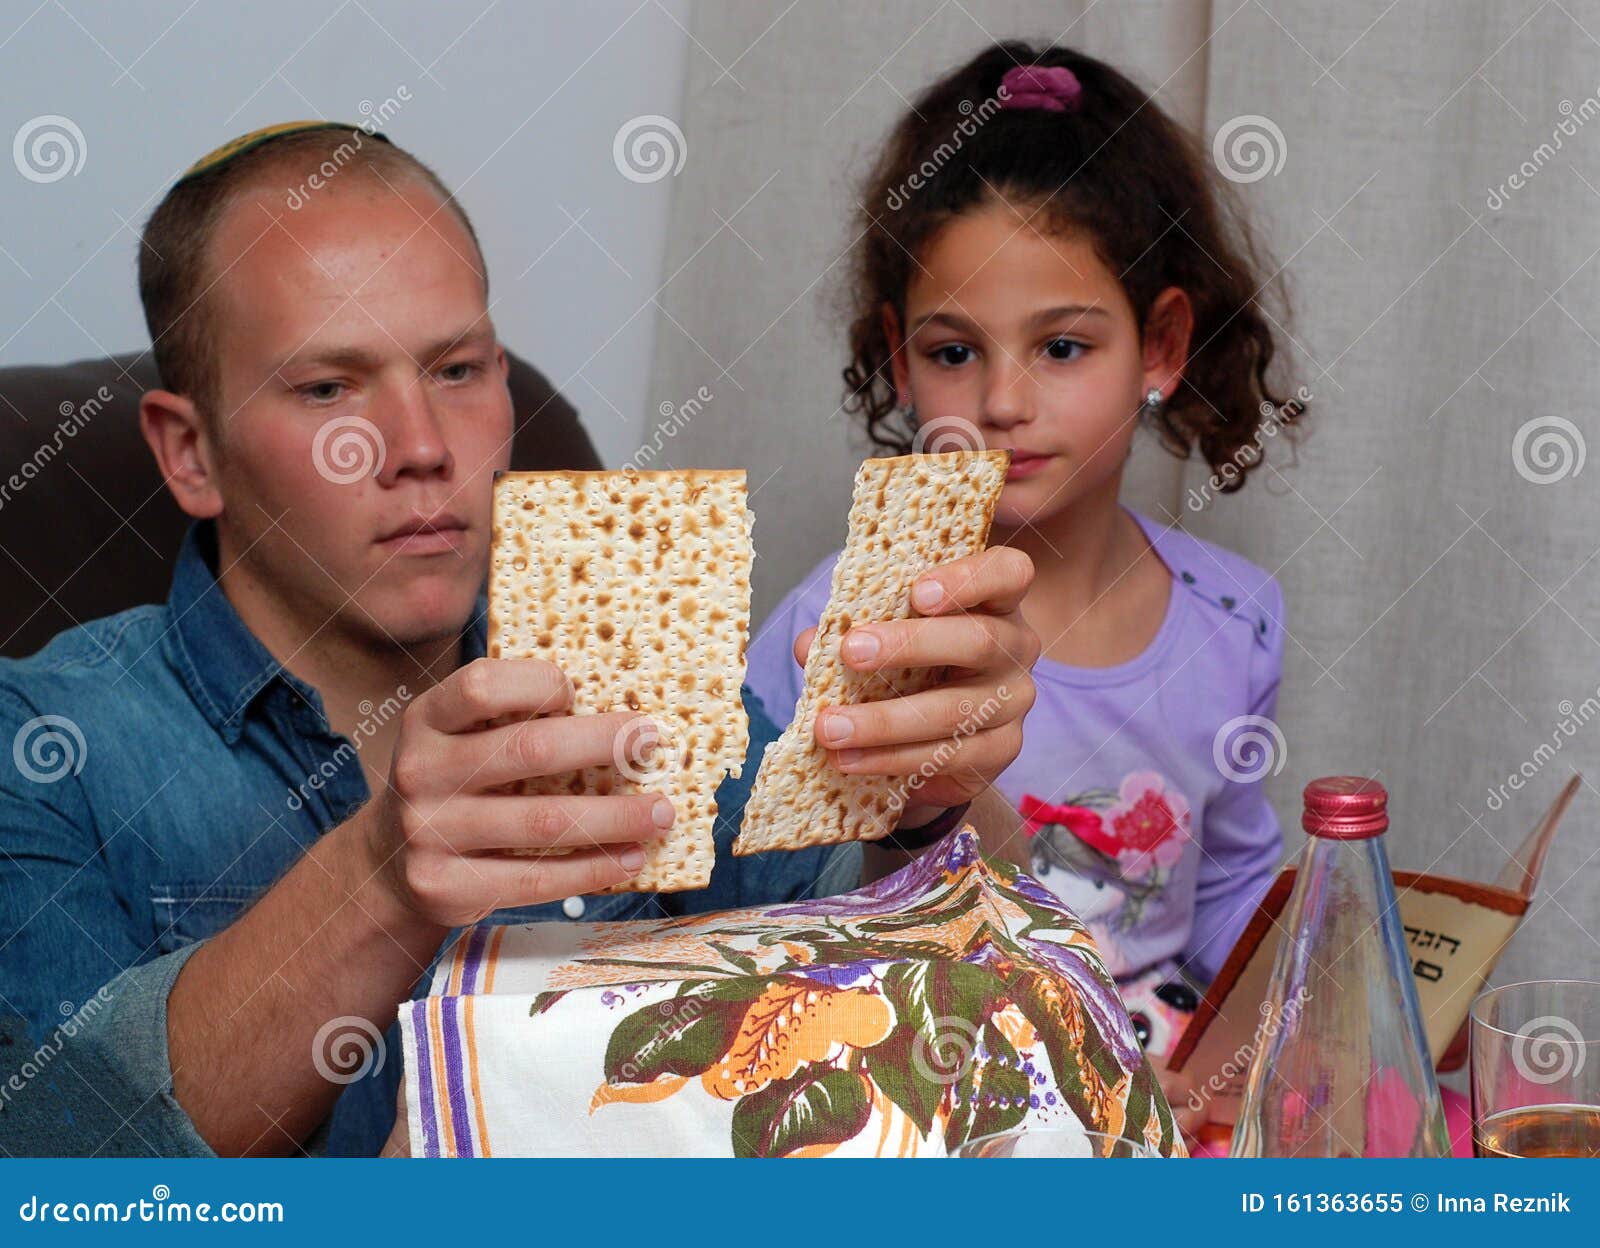 Celebrating Passover Royalty-Free Stock Photography | CartoonDealer.com ...